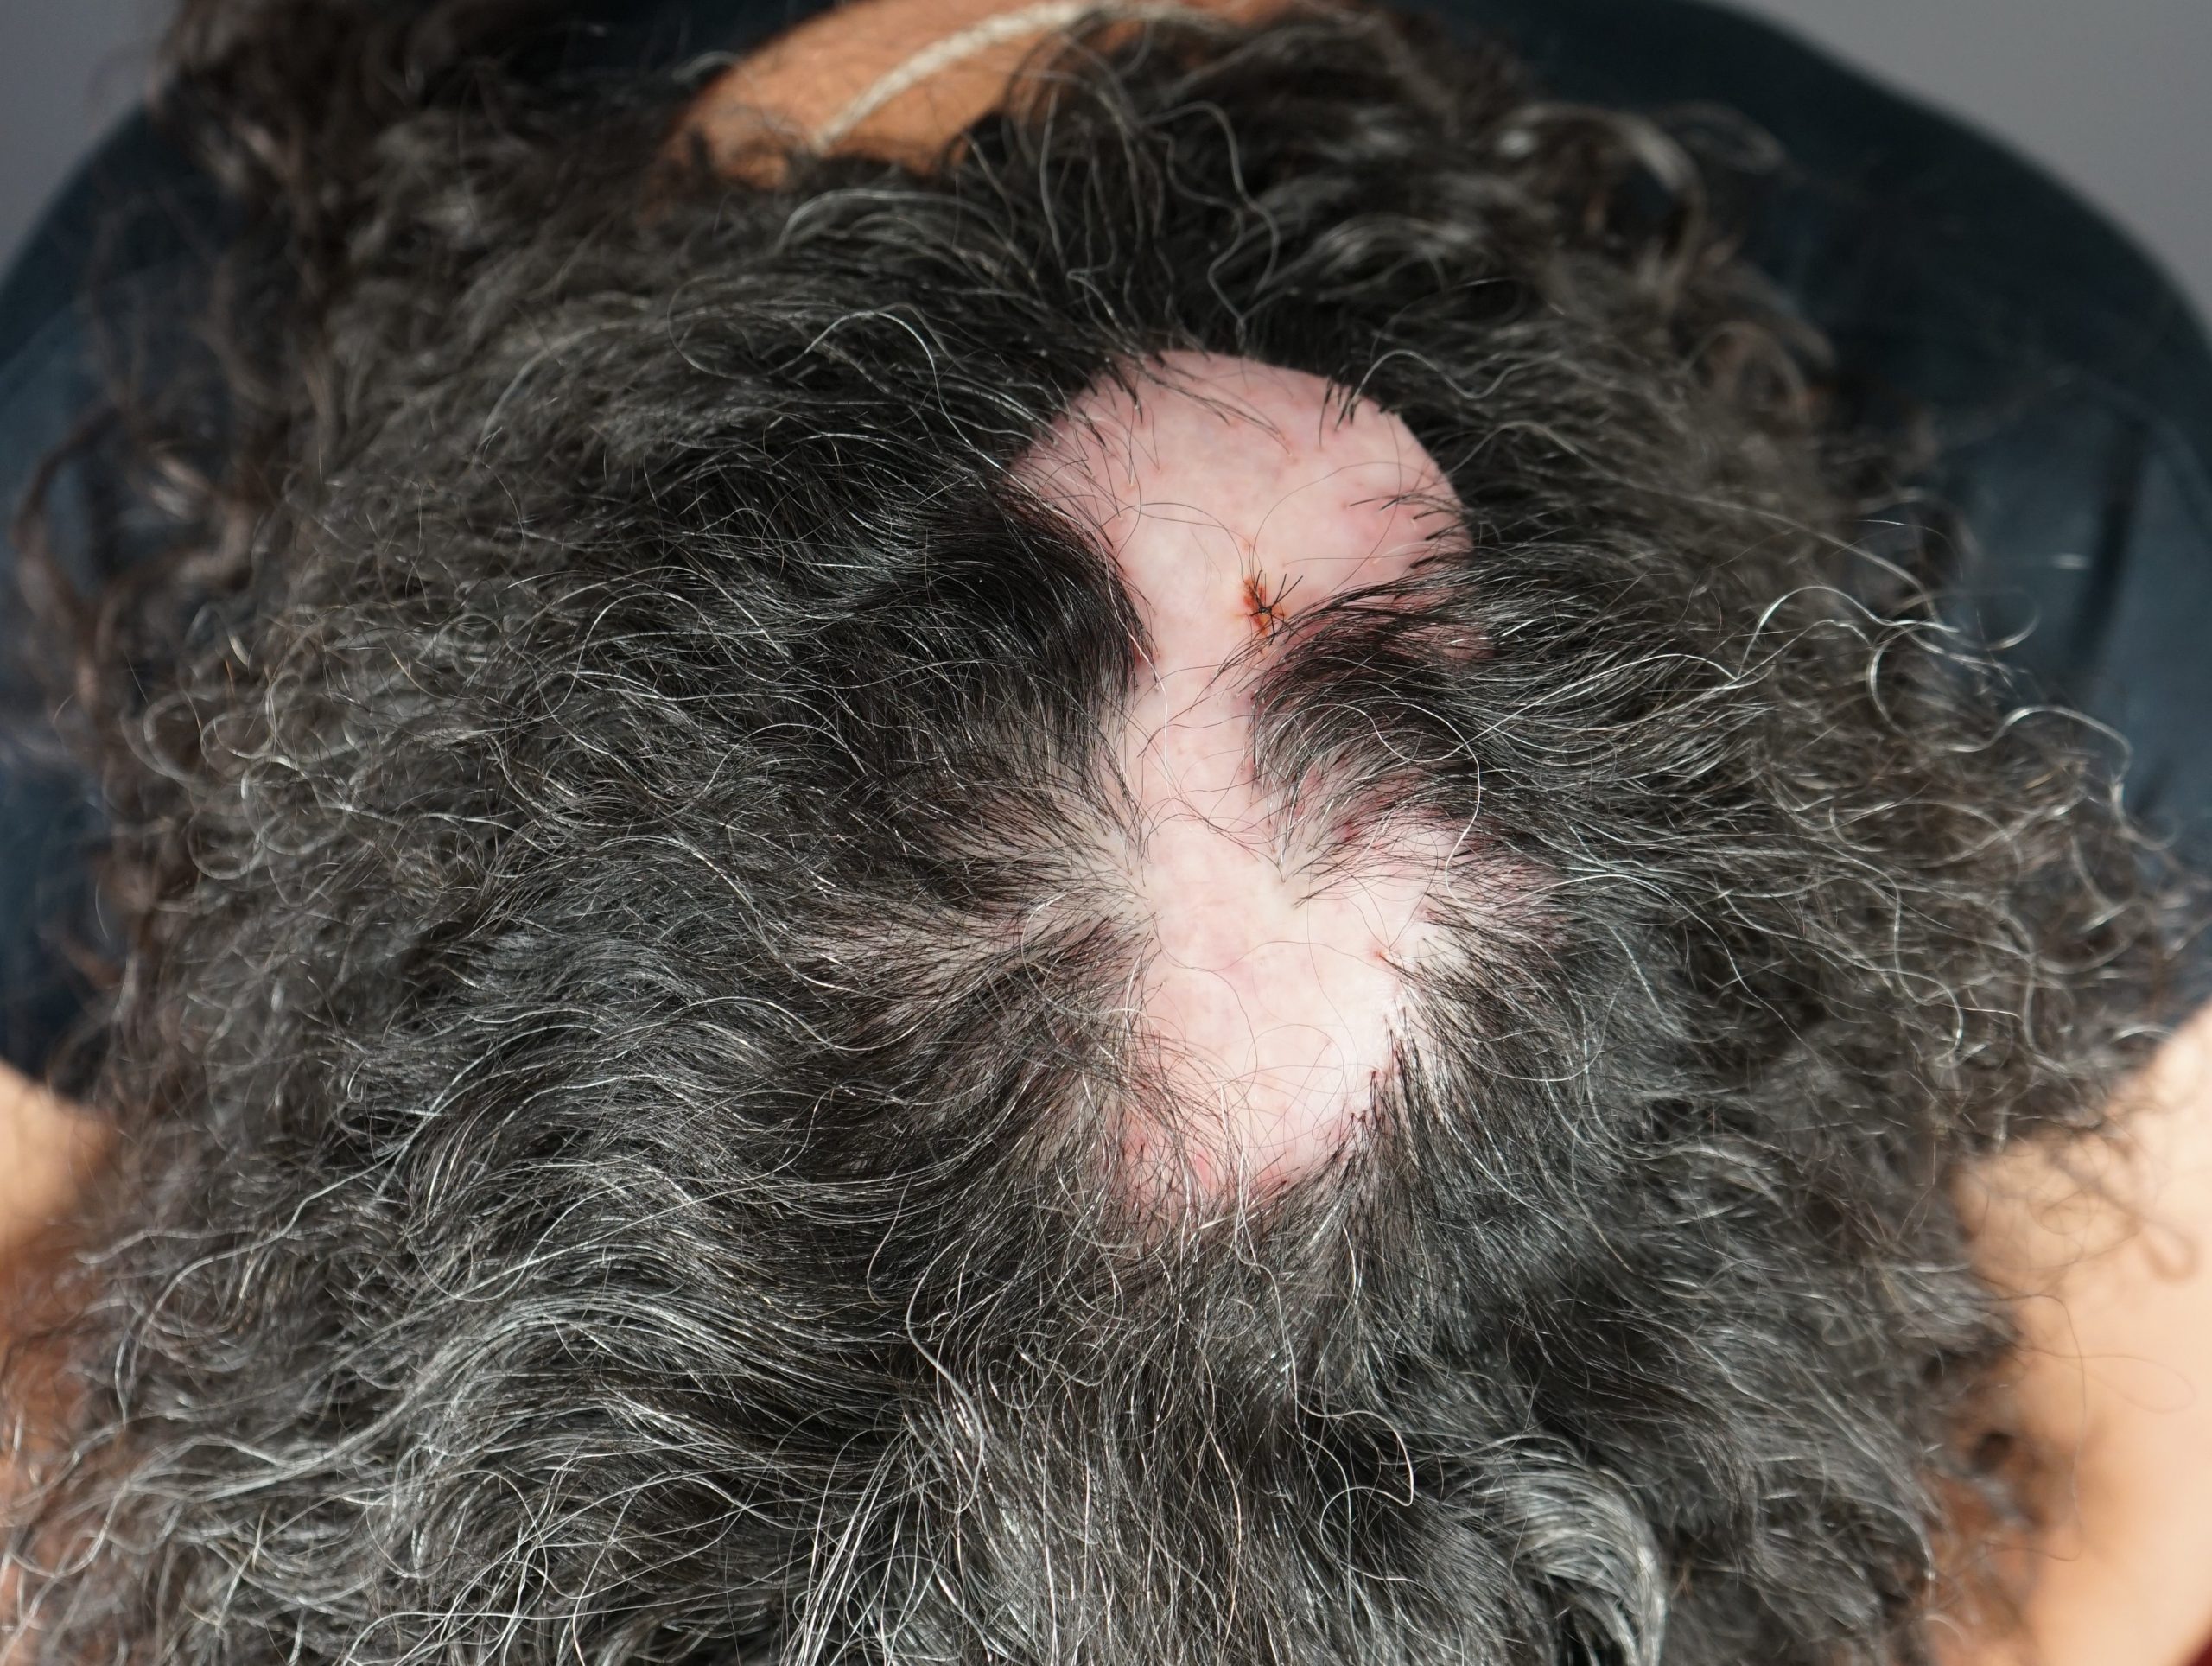 Example of Folliculitis Decalvans (FD) Patient #1 - Dr. U Skin & Hair Clinic, The Bumpinator